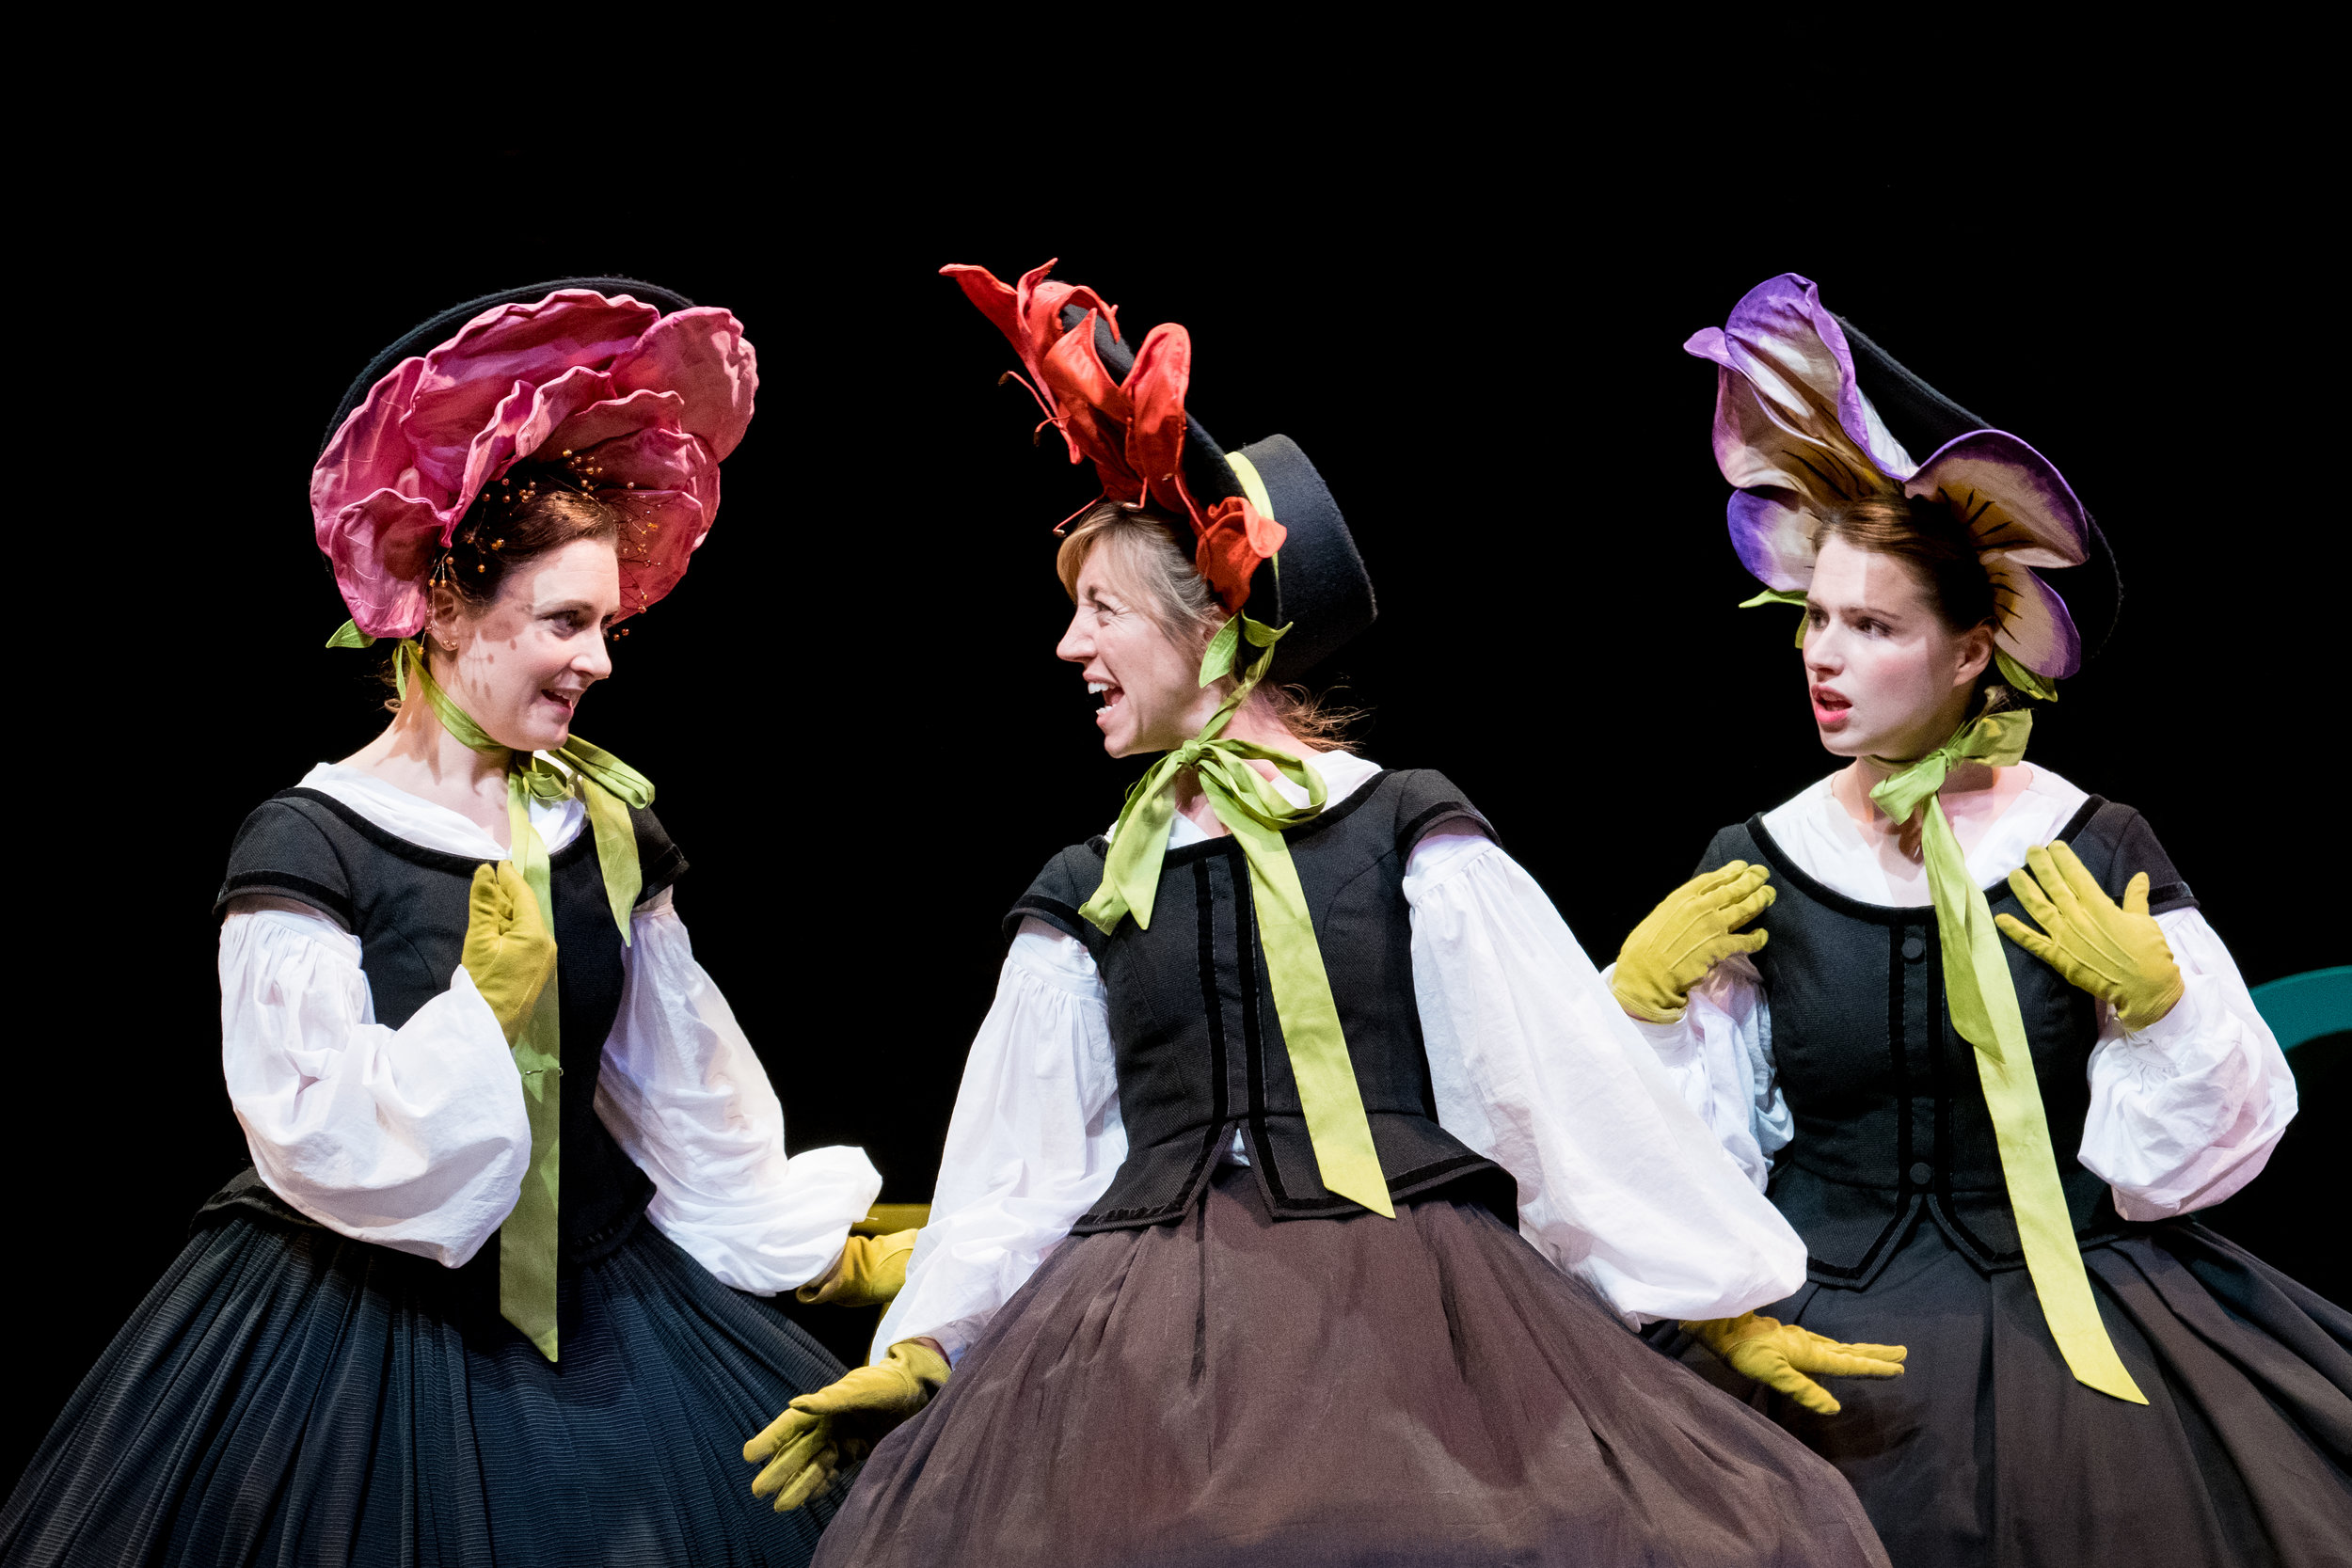  Barbara Hockaday, Nancy Sullivan &amp; Charlotte Miranda Smith in Alice in Wonderland, Storyhouse, composed by Jude Obermüller (photo by Mark McNulty) 